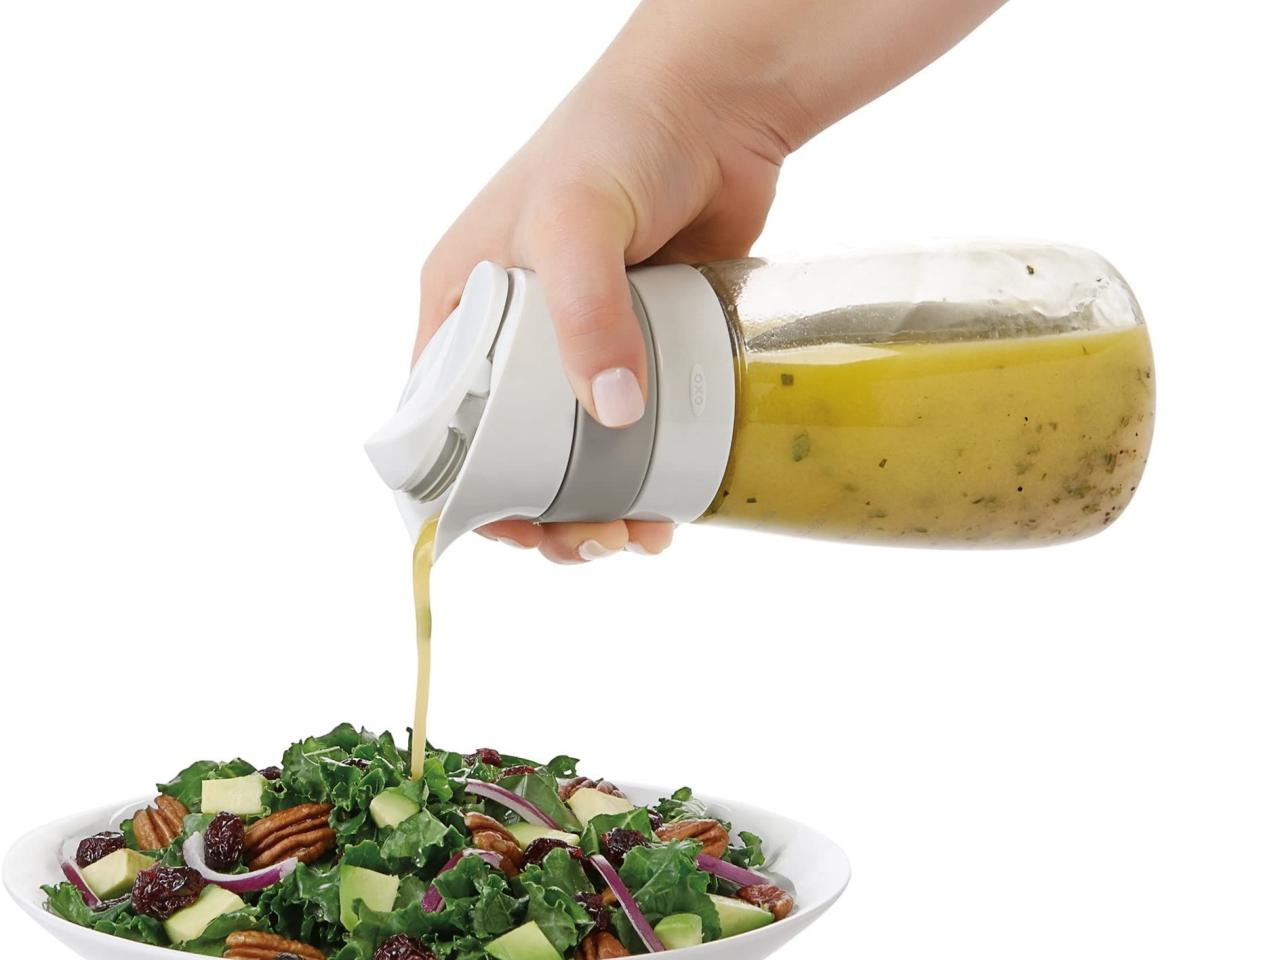 How We Designed the Twist & Pour Salad Dressing Mixer